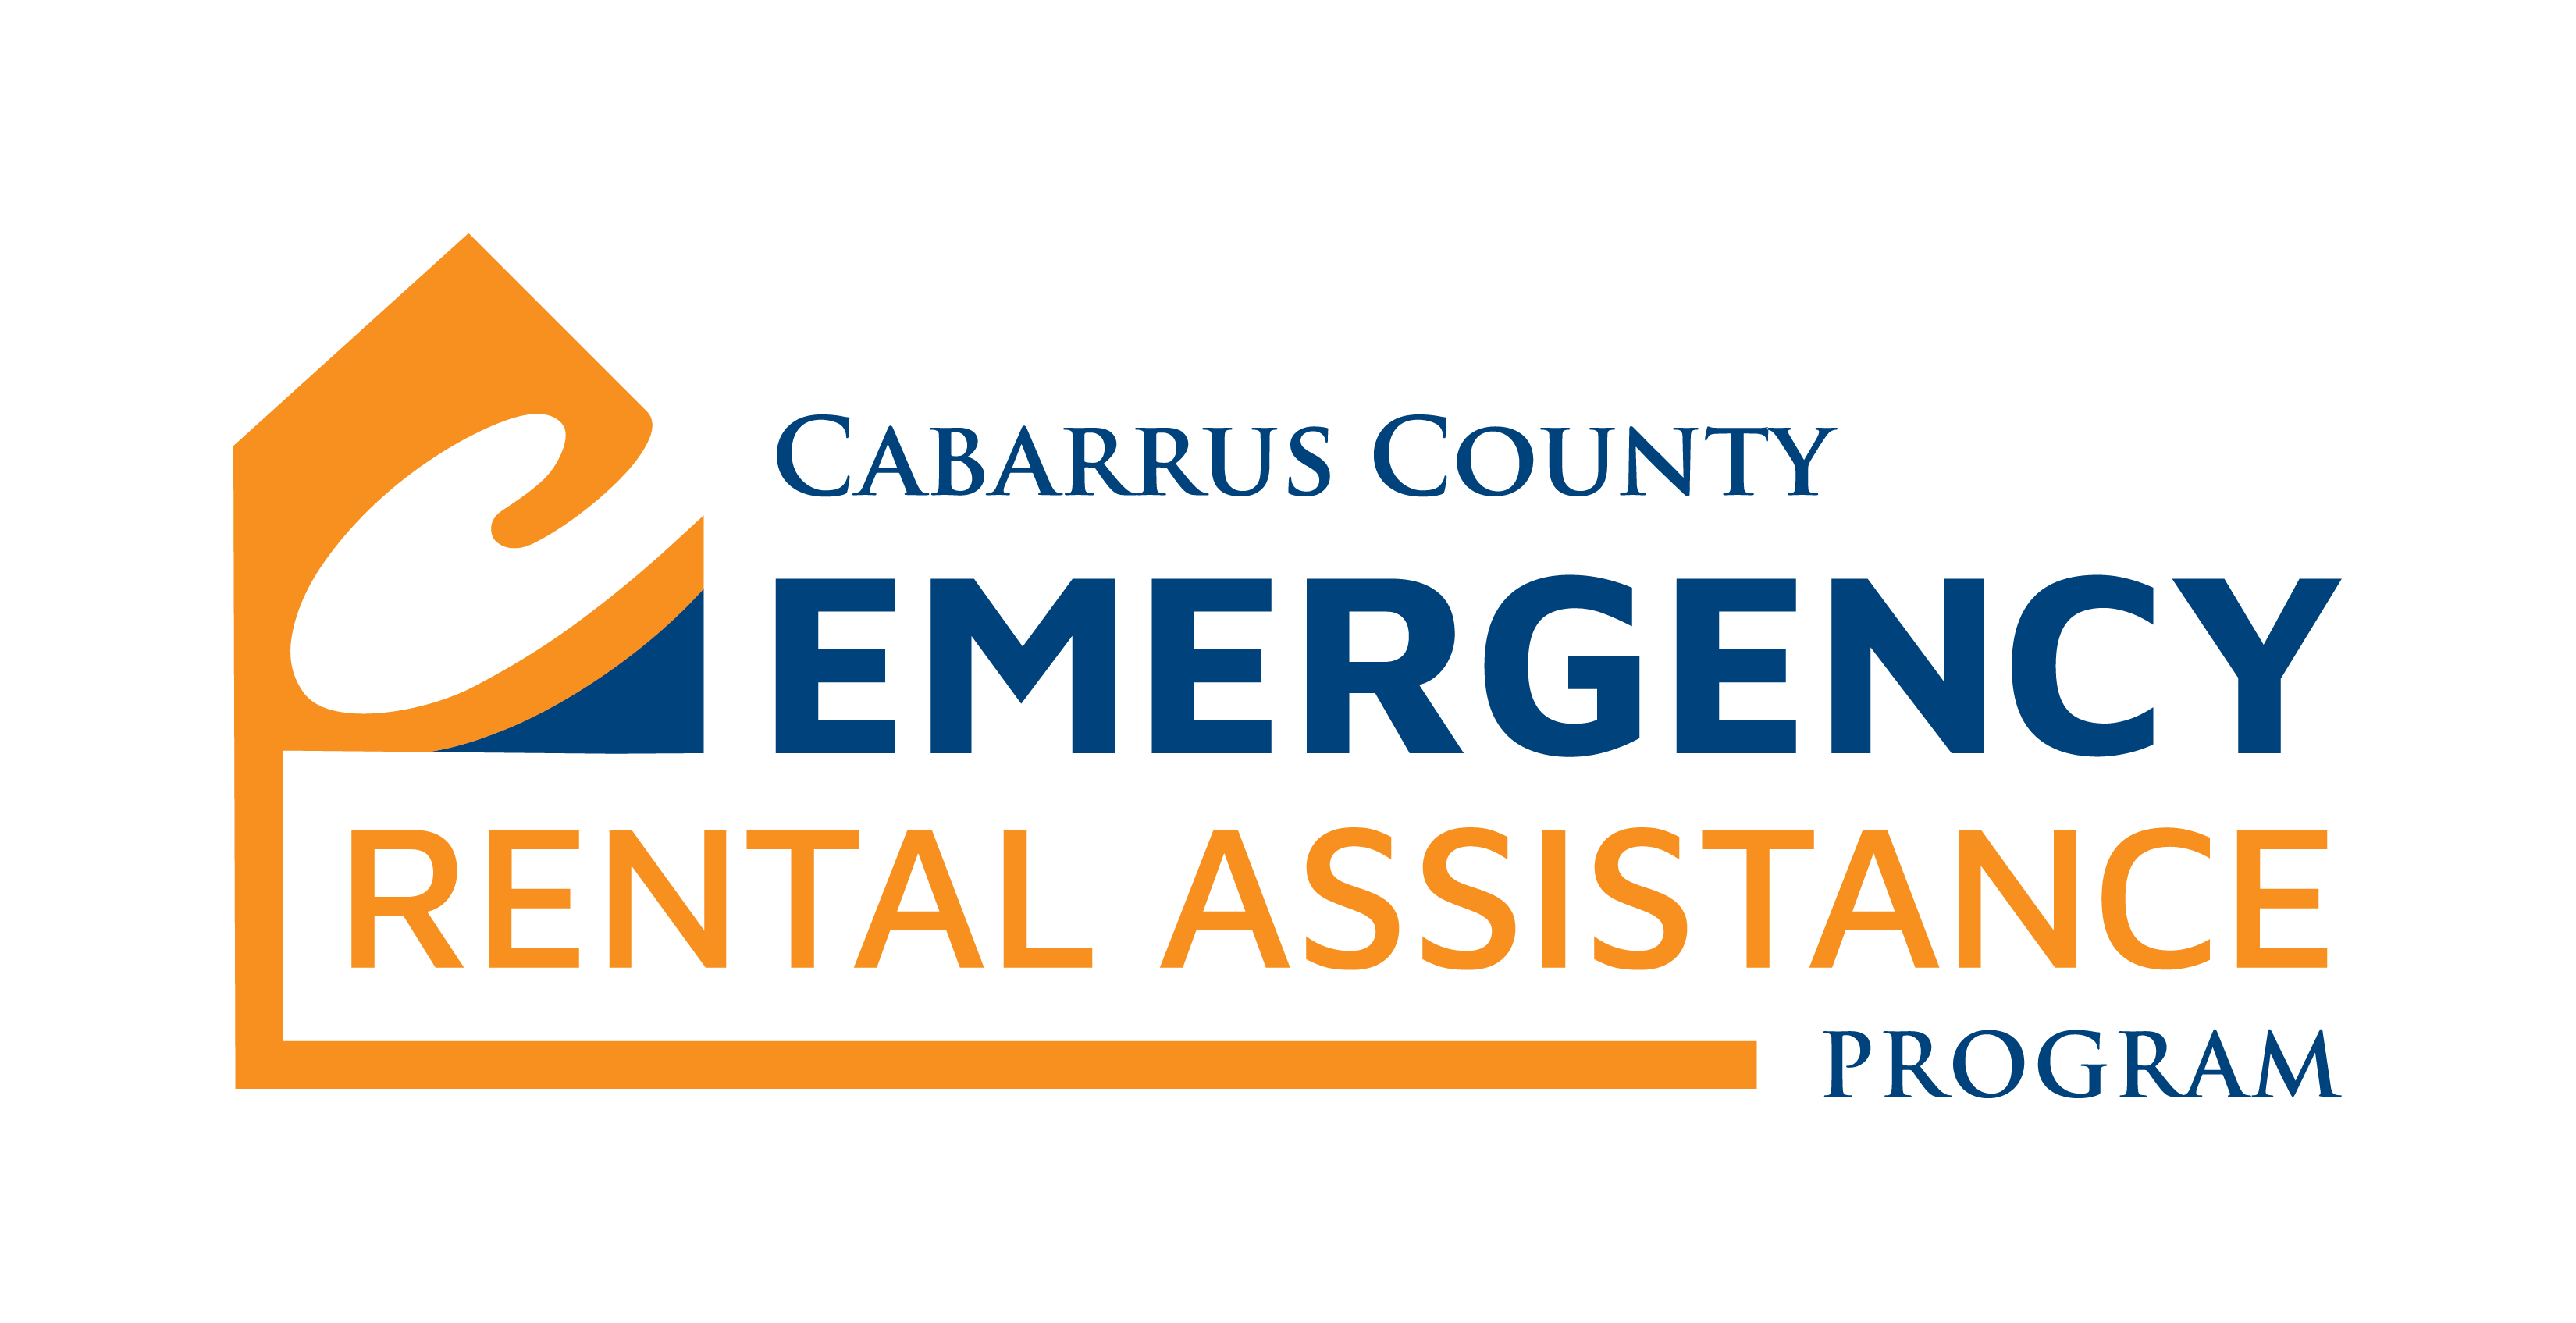 Emergency Rental Assistance Program